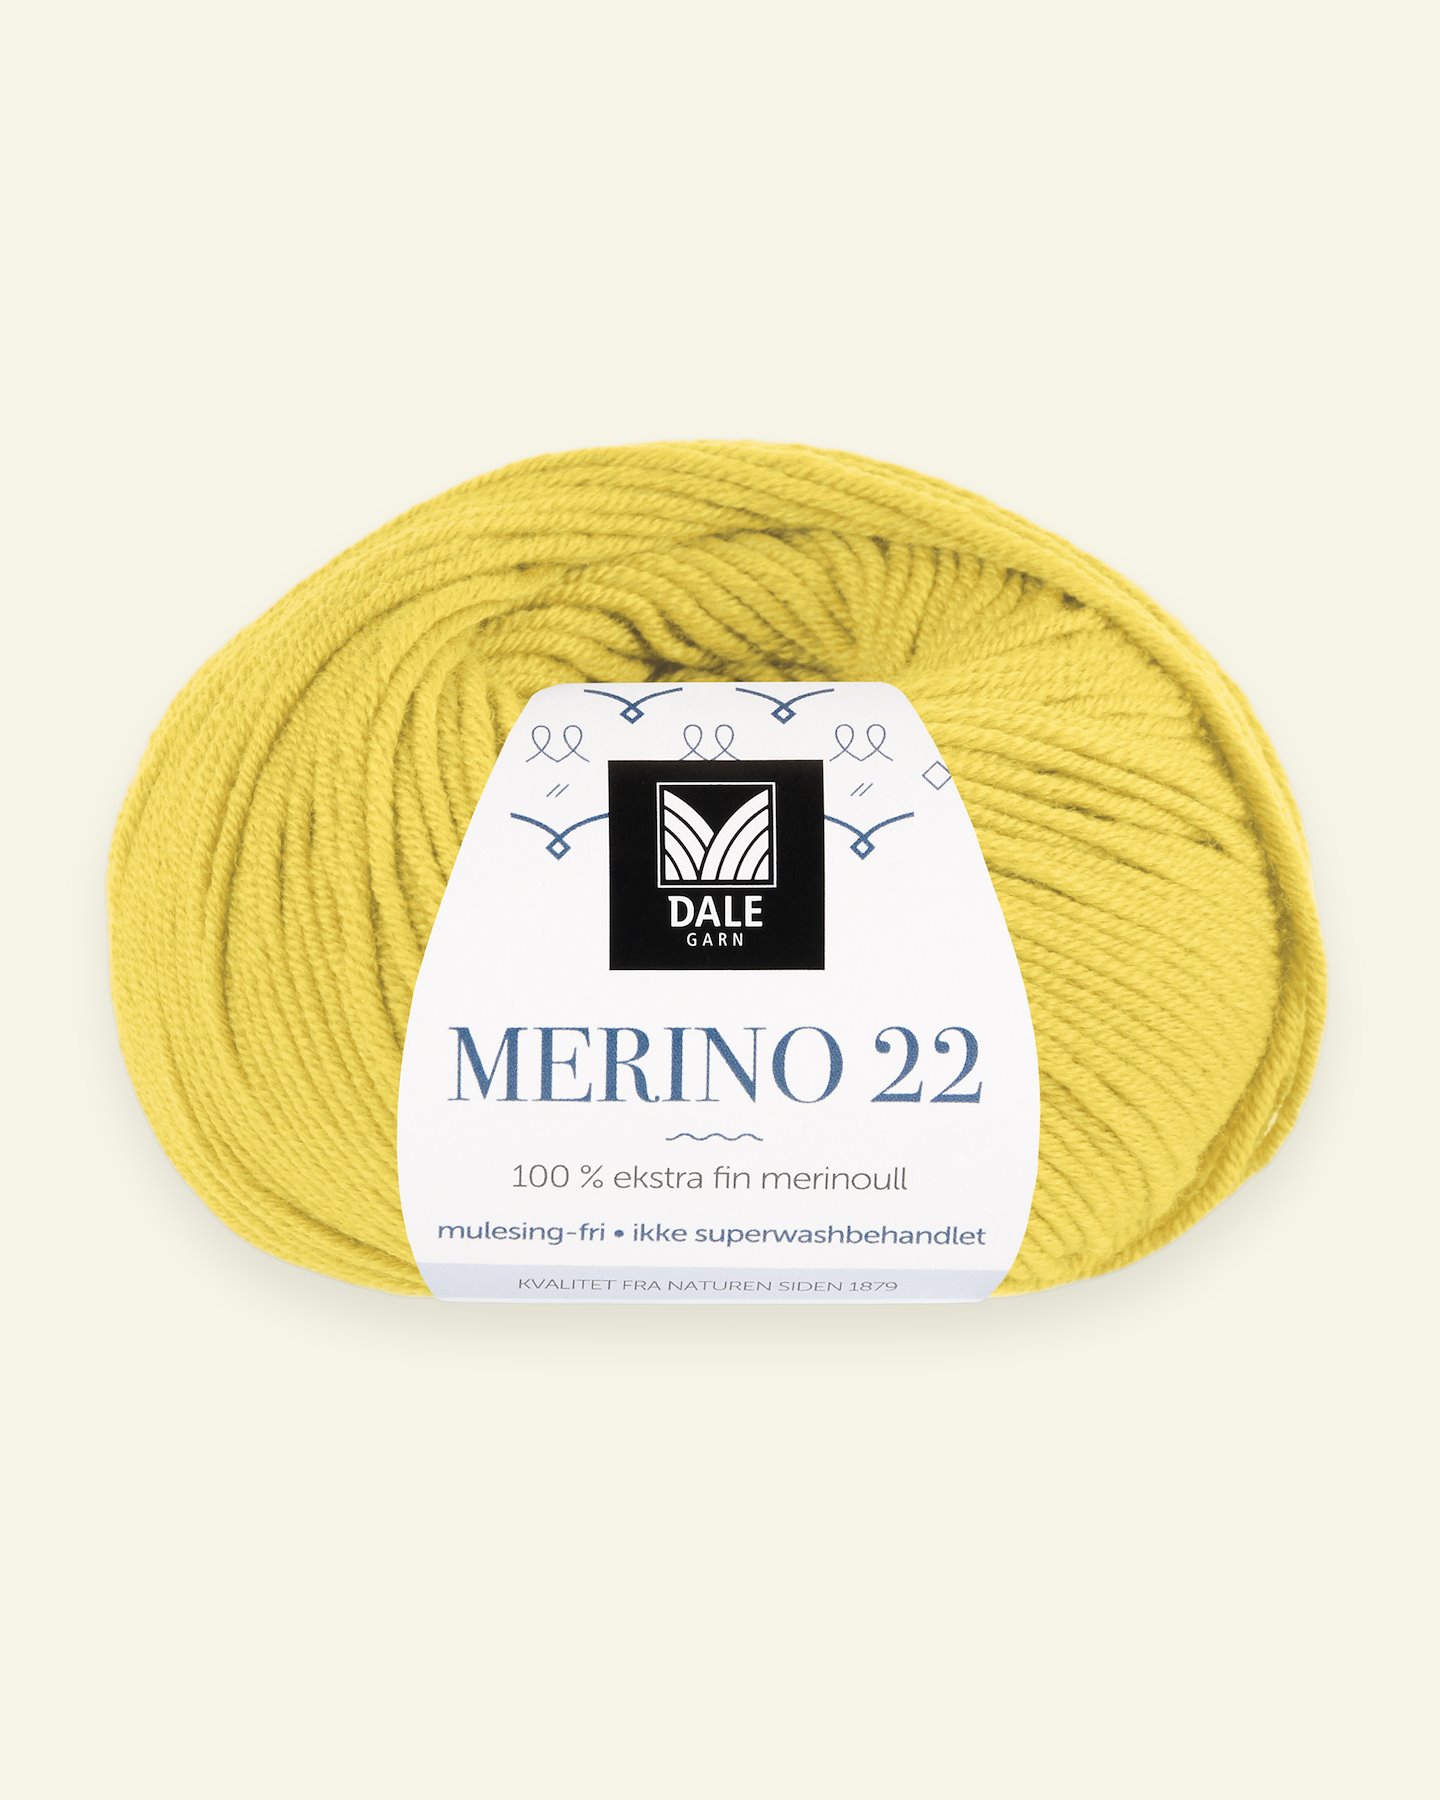 Dale Garn, 100% Extrafeine Merino-Wolle "Merino 22", gelb (2030) 90000391_pack